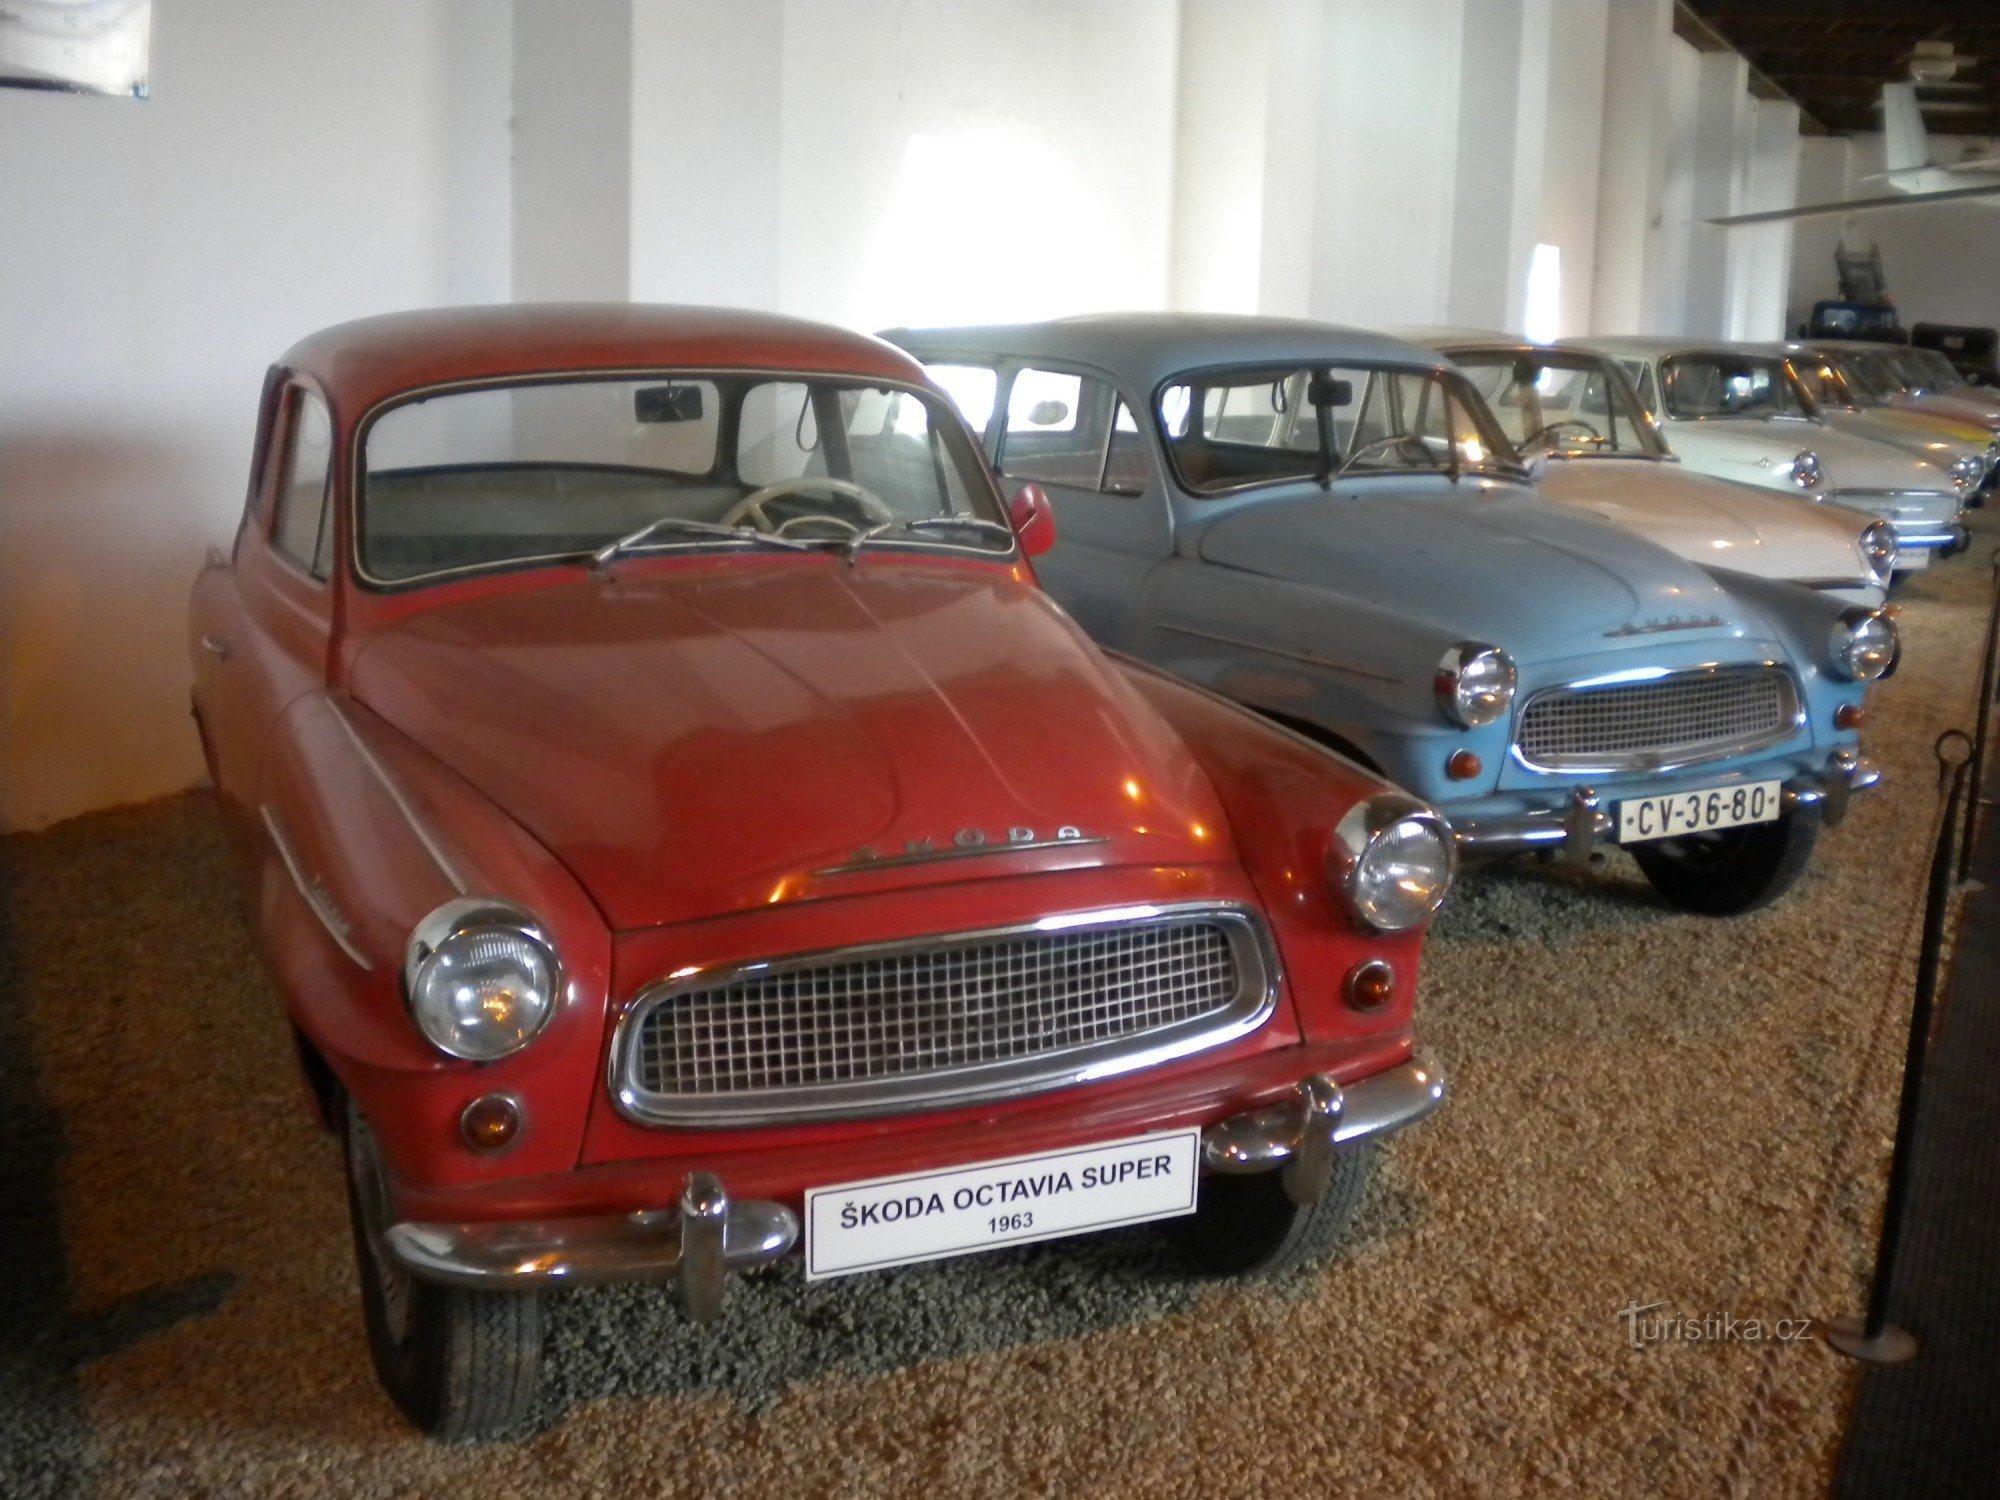 Automuseum Theresienstadt